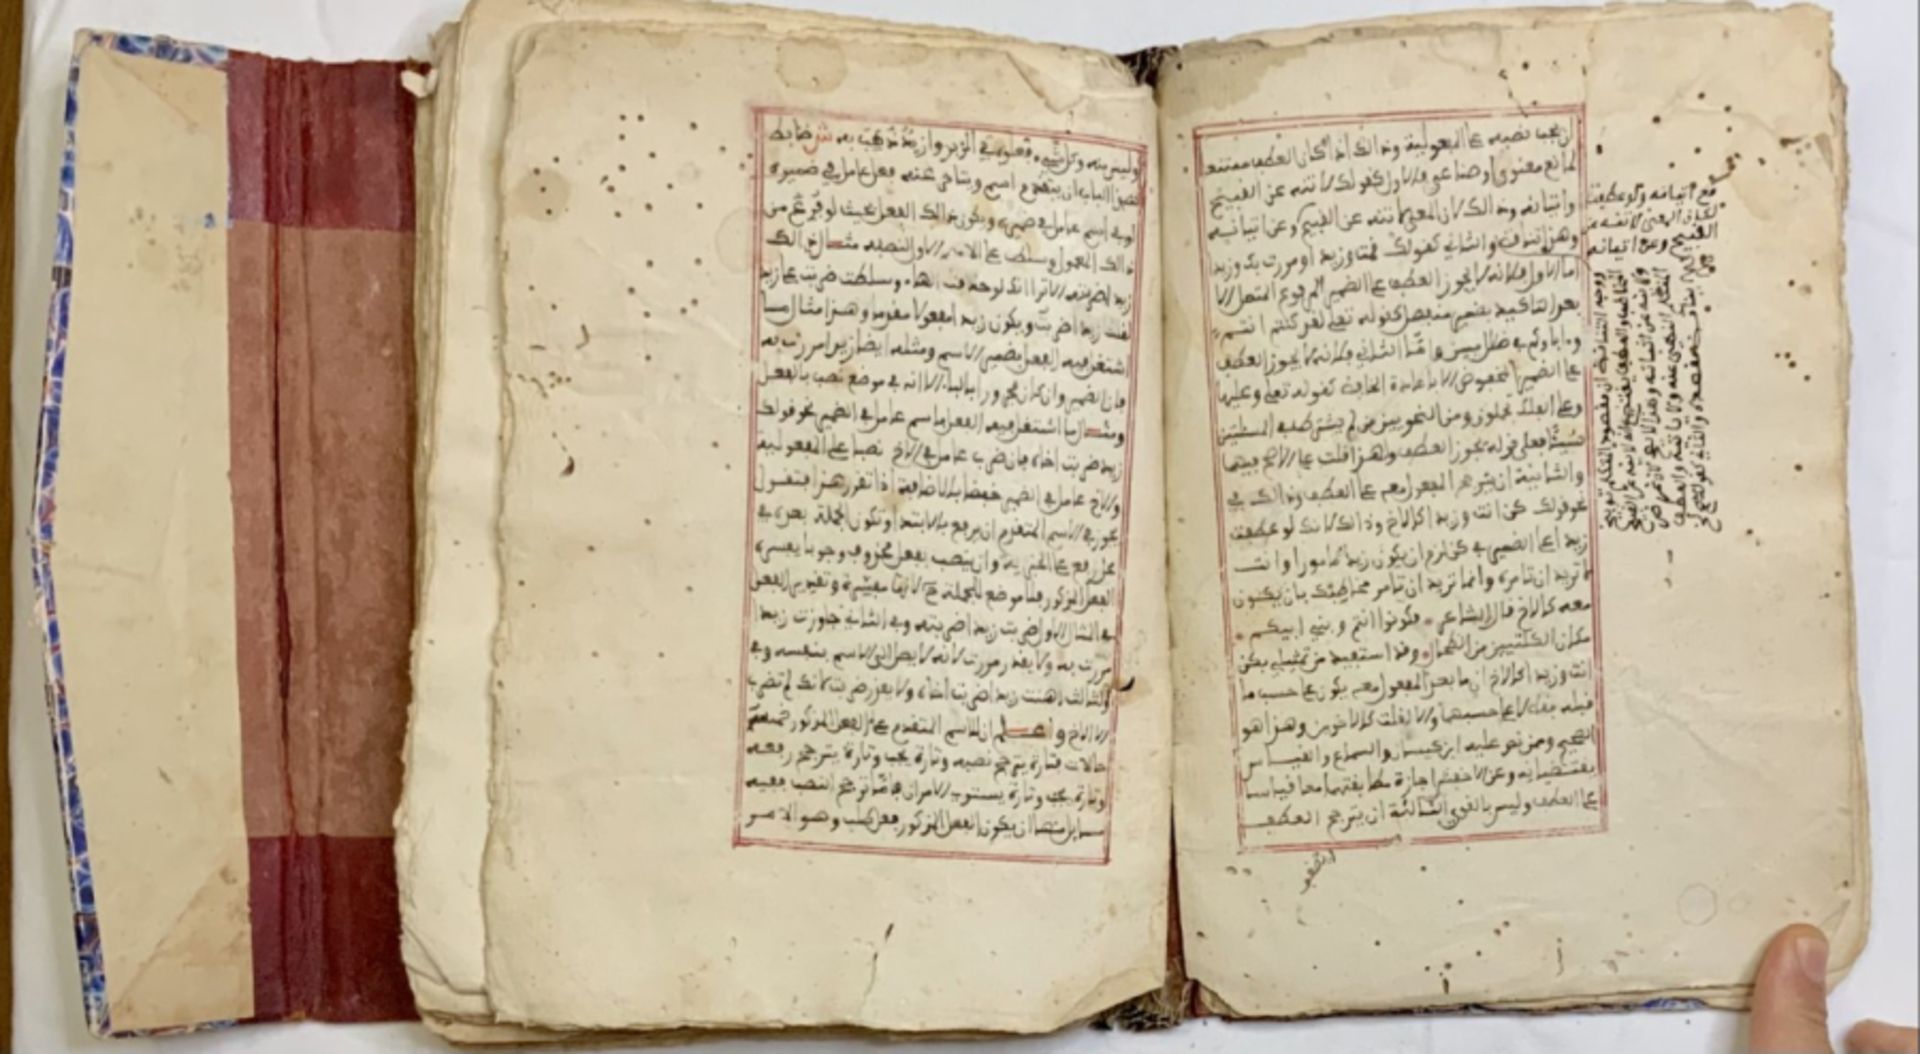 18th century Islamic manuscript on morphology and rhetoric - Image 5 of 18